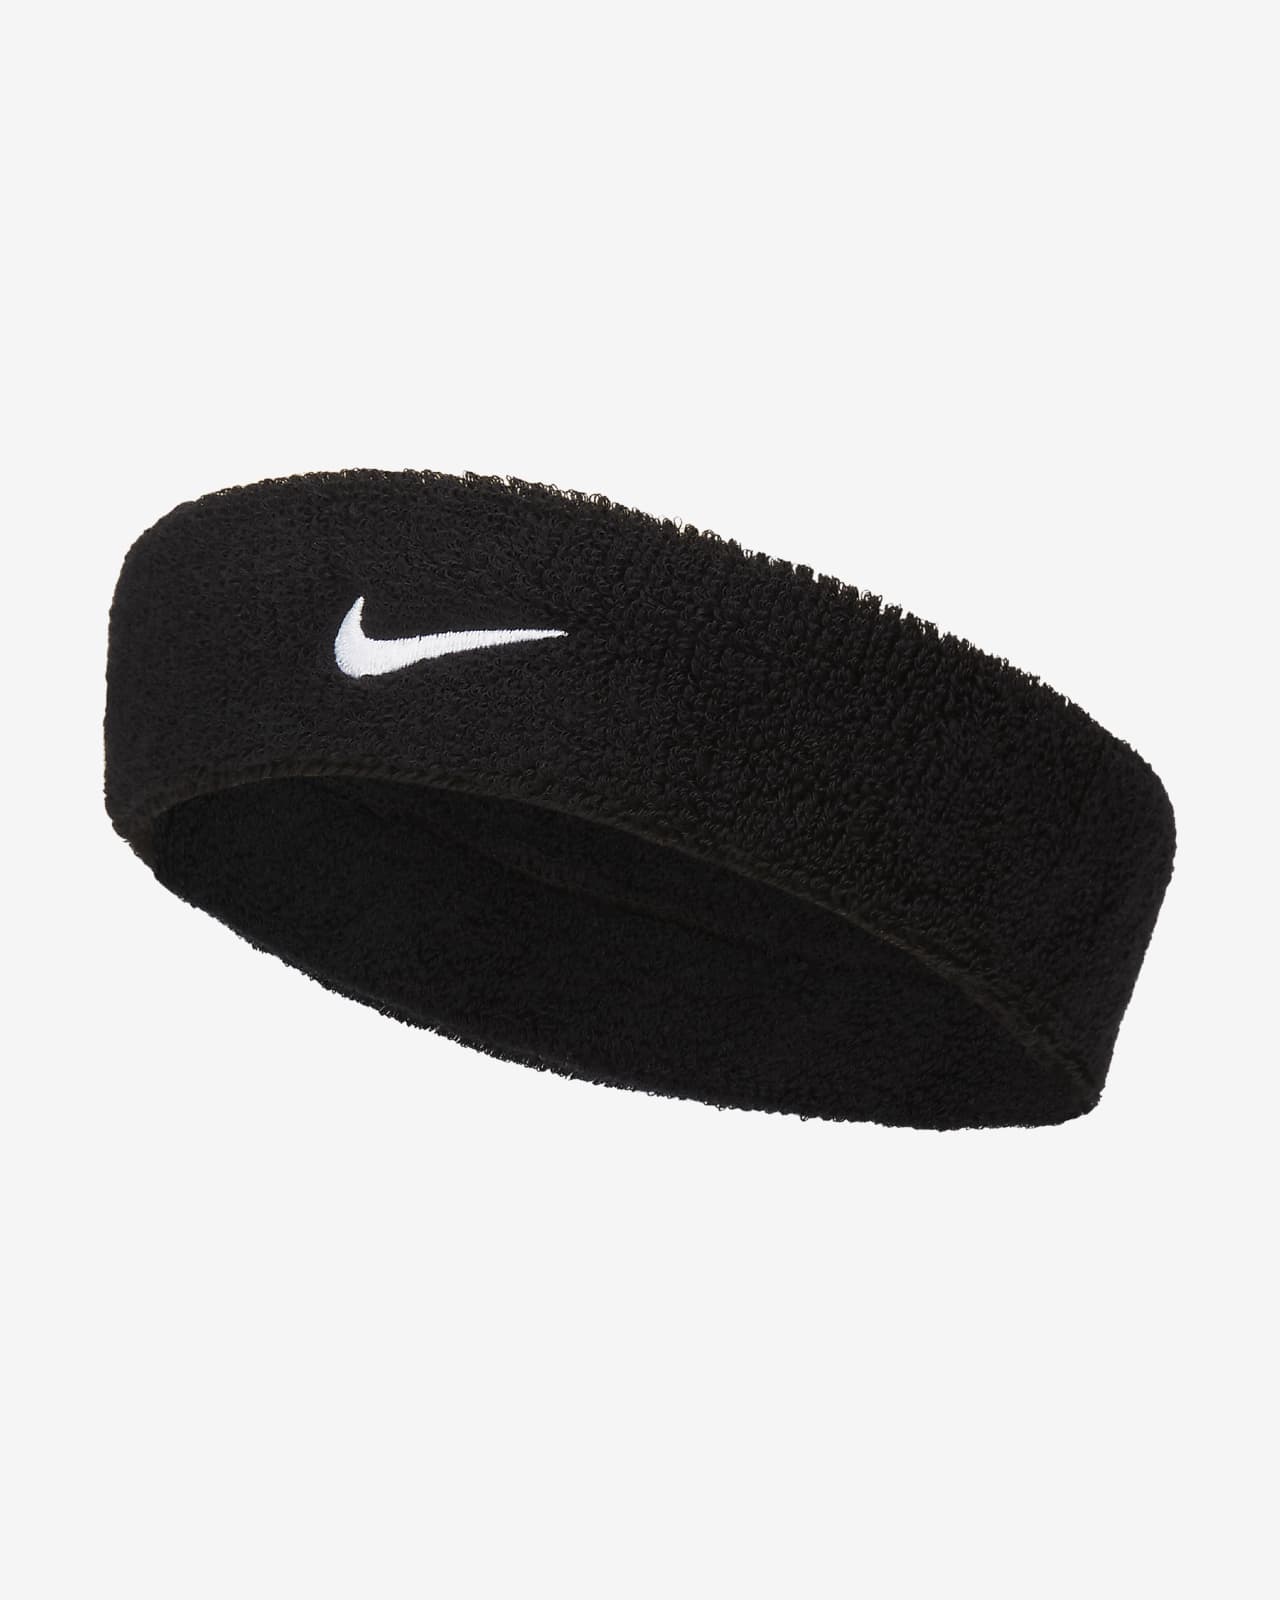 Cinta Pelo Nike - Negro - Diadema Elástica